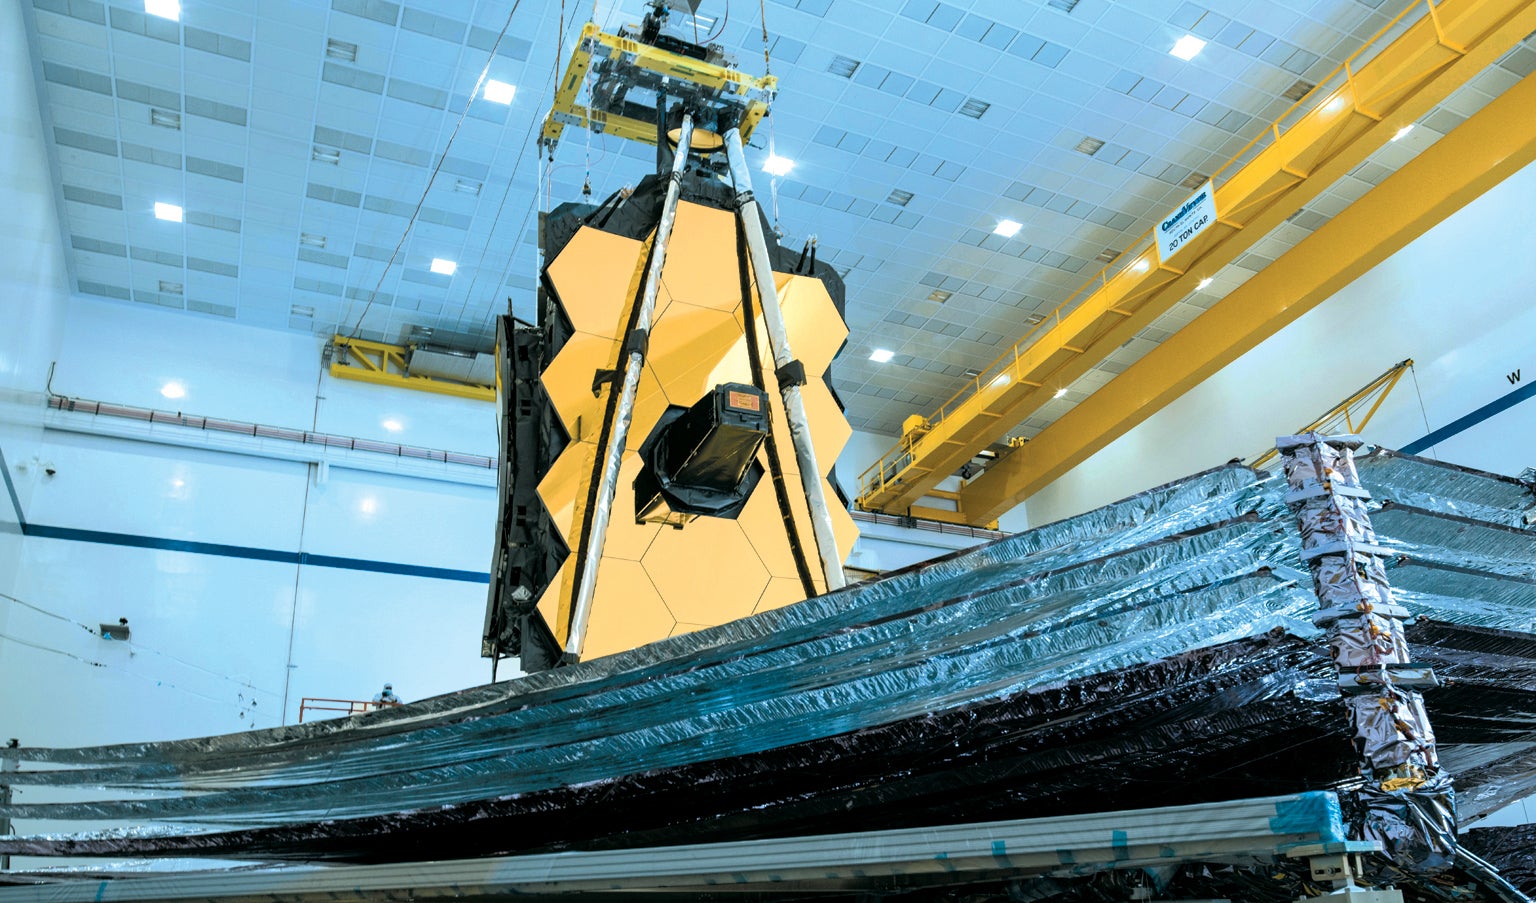 The fully built James Webb Space Telescope